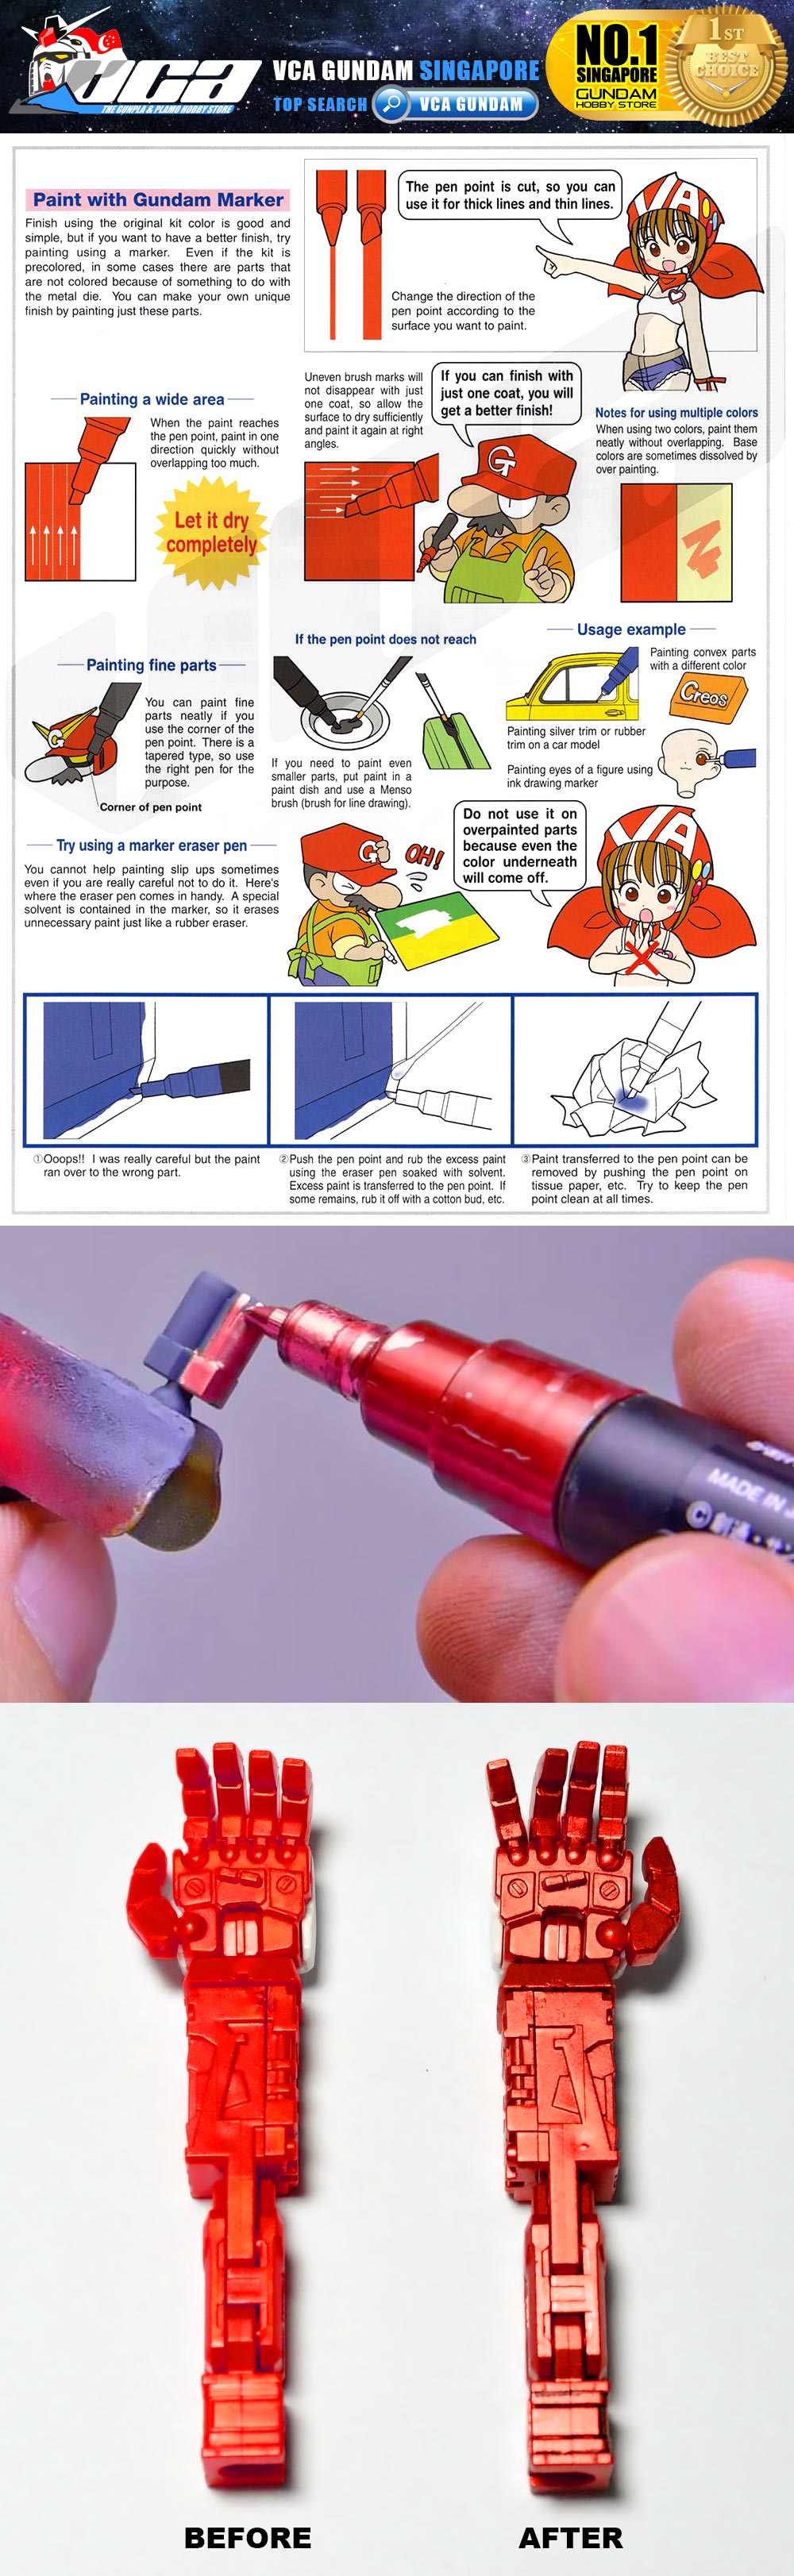 GSI CREOS MR GREY HOBBY GM16 Gundam Marker Painting Pen Red Metallic